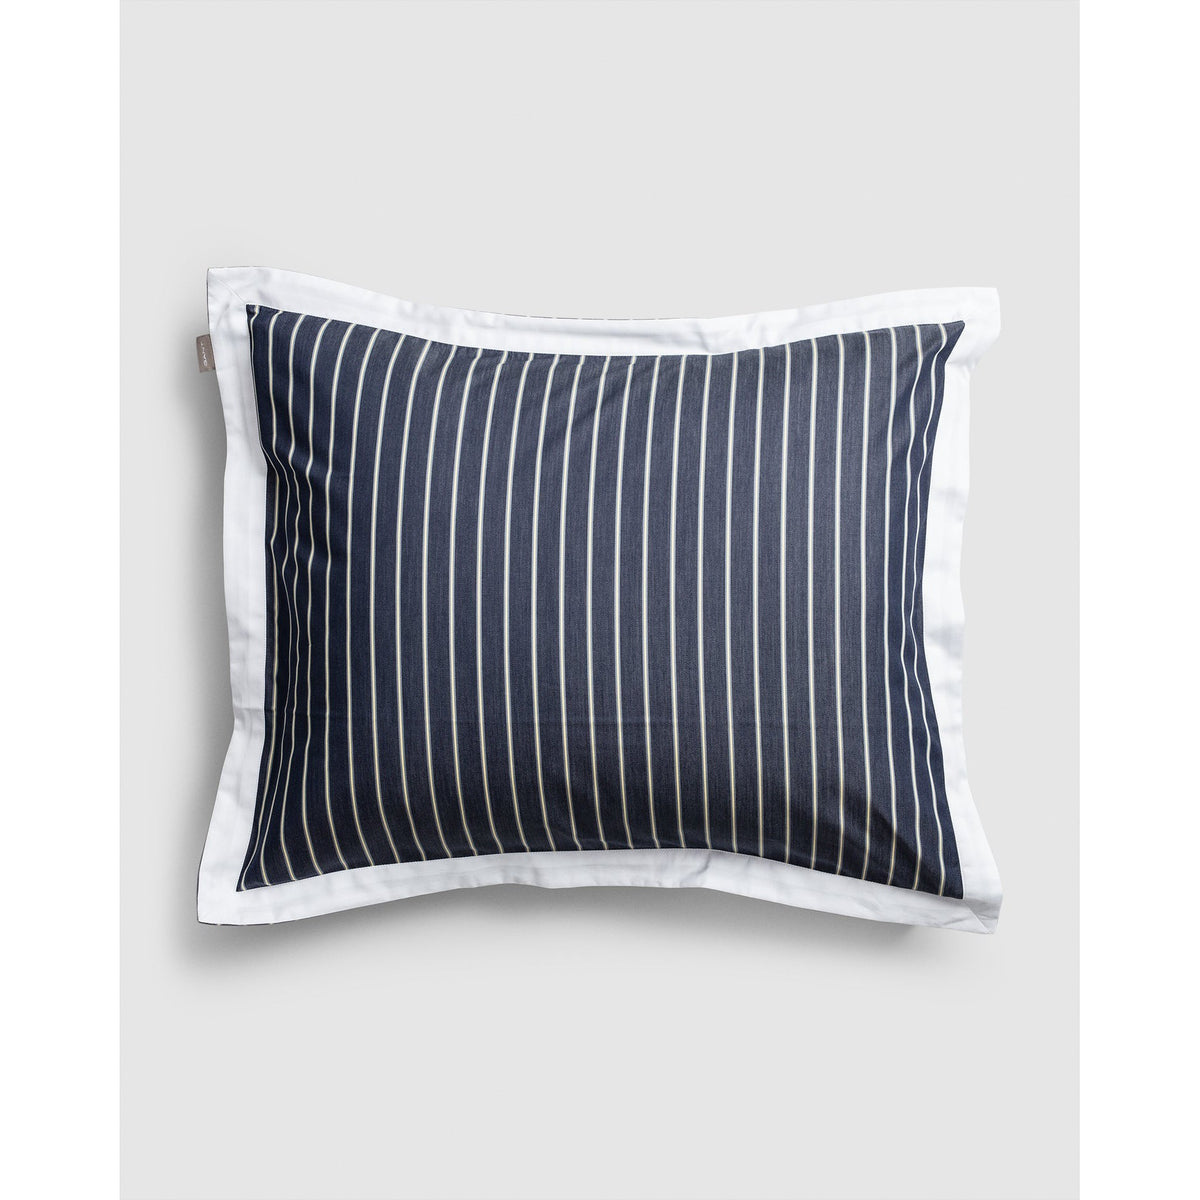 Gant Home Organia Stripe Pillow Case